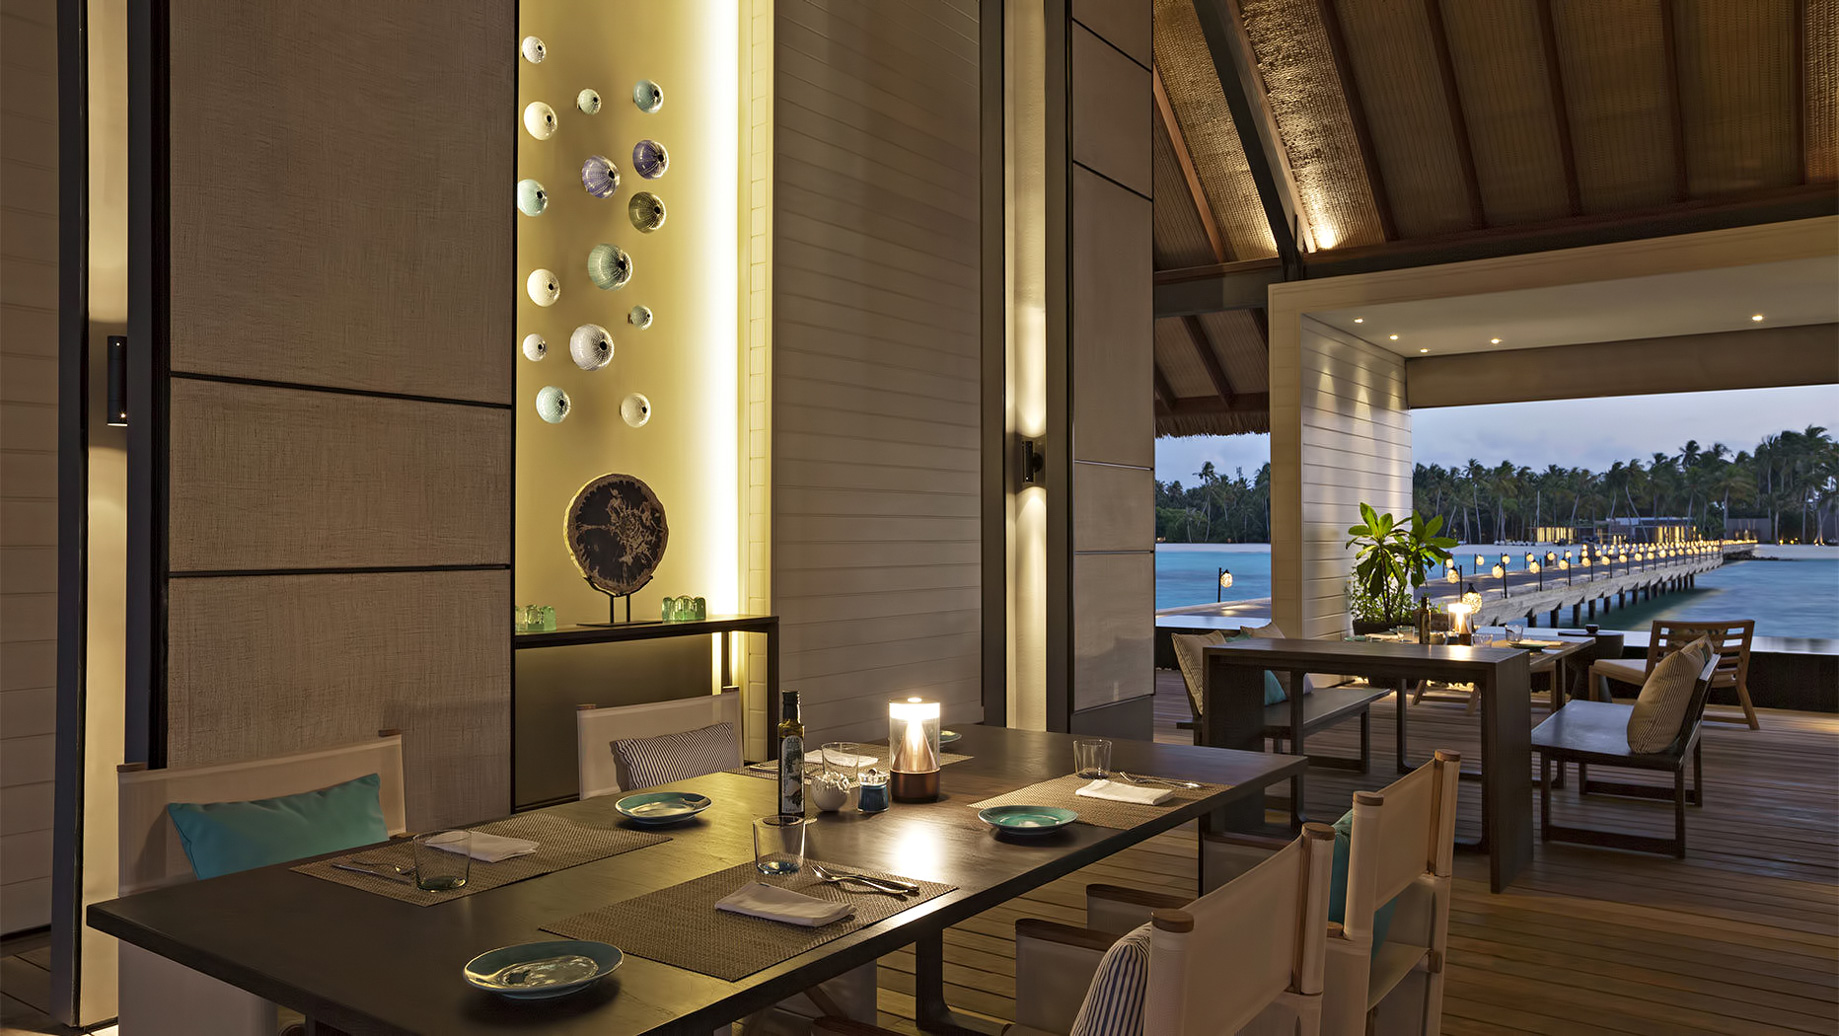 Cheval Blanc Randheli Resort – Noonu Atoll, Maldives – Deelani Restaurant Sunset